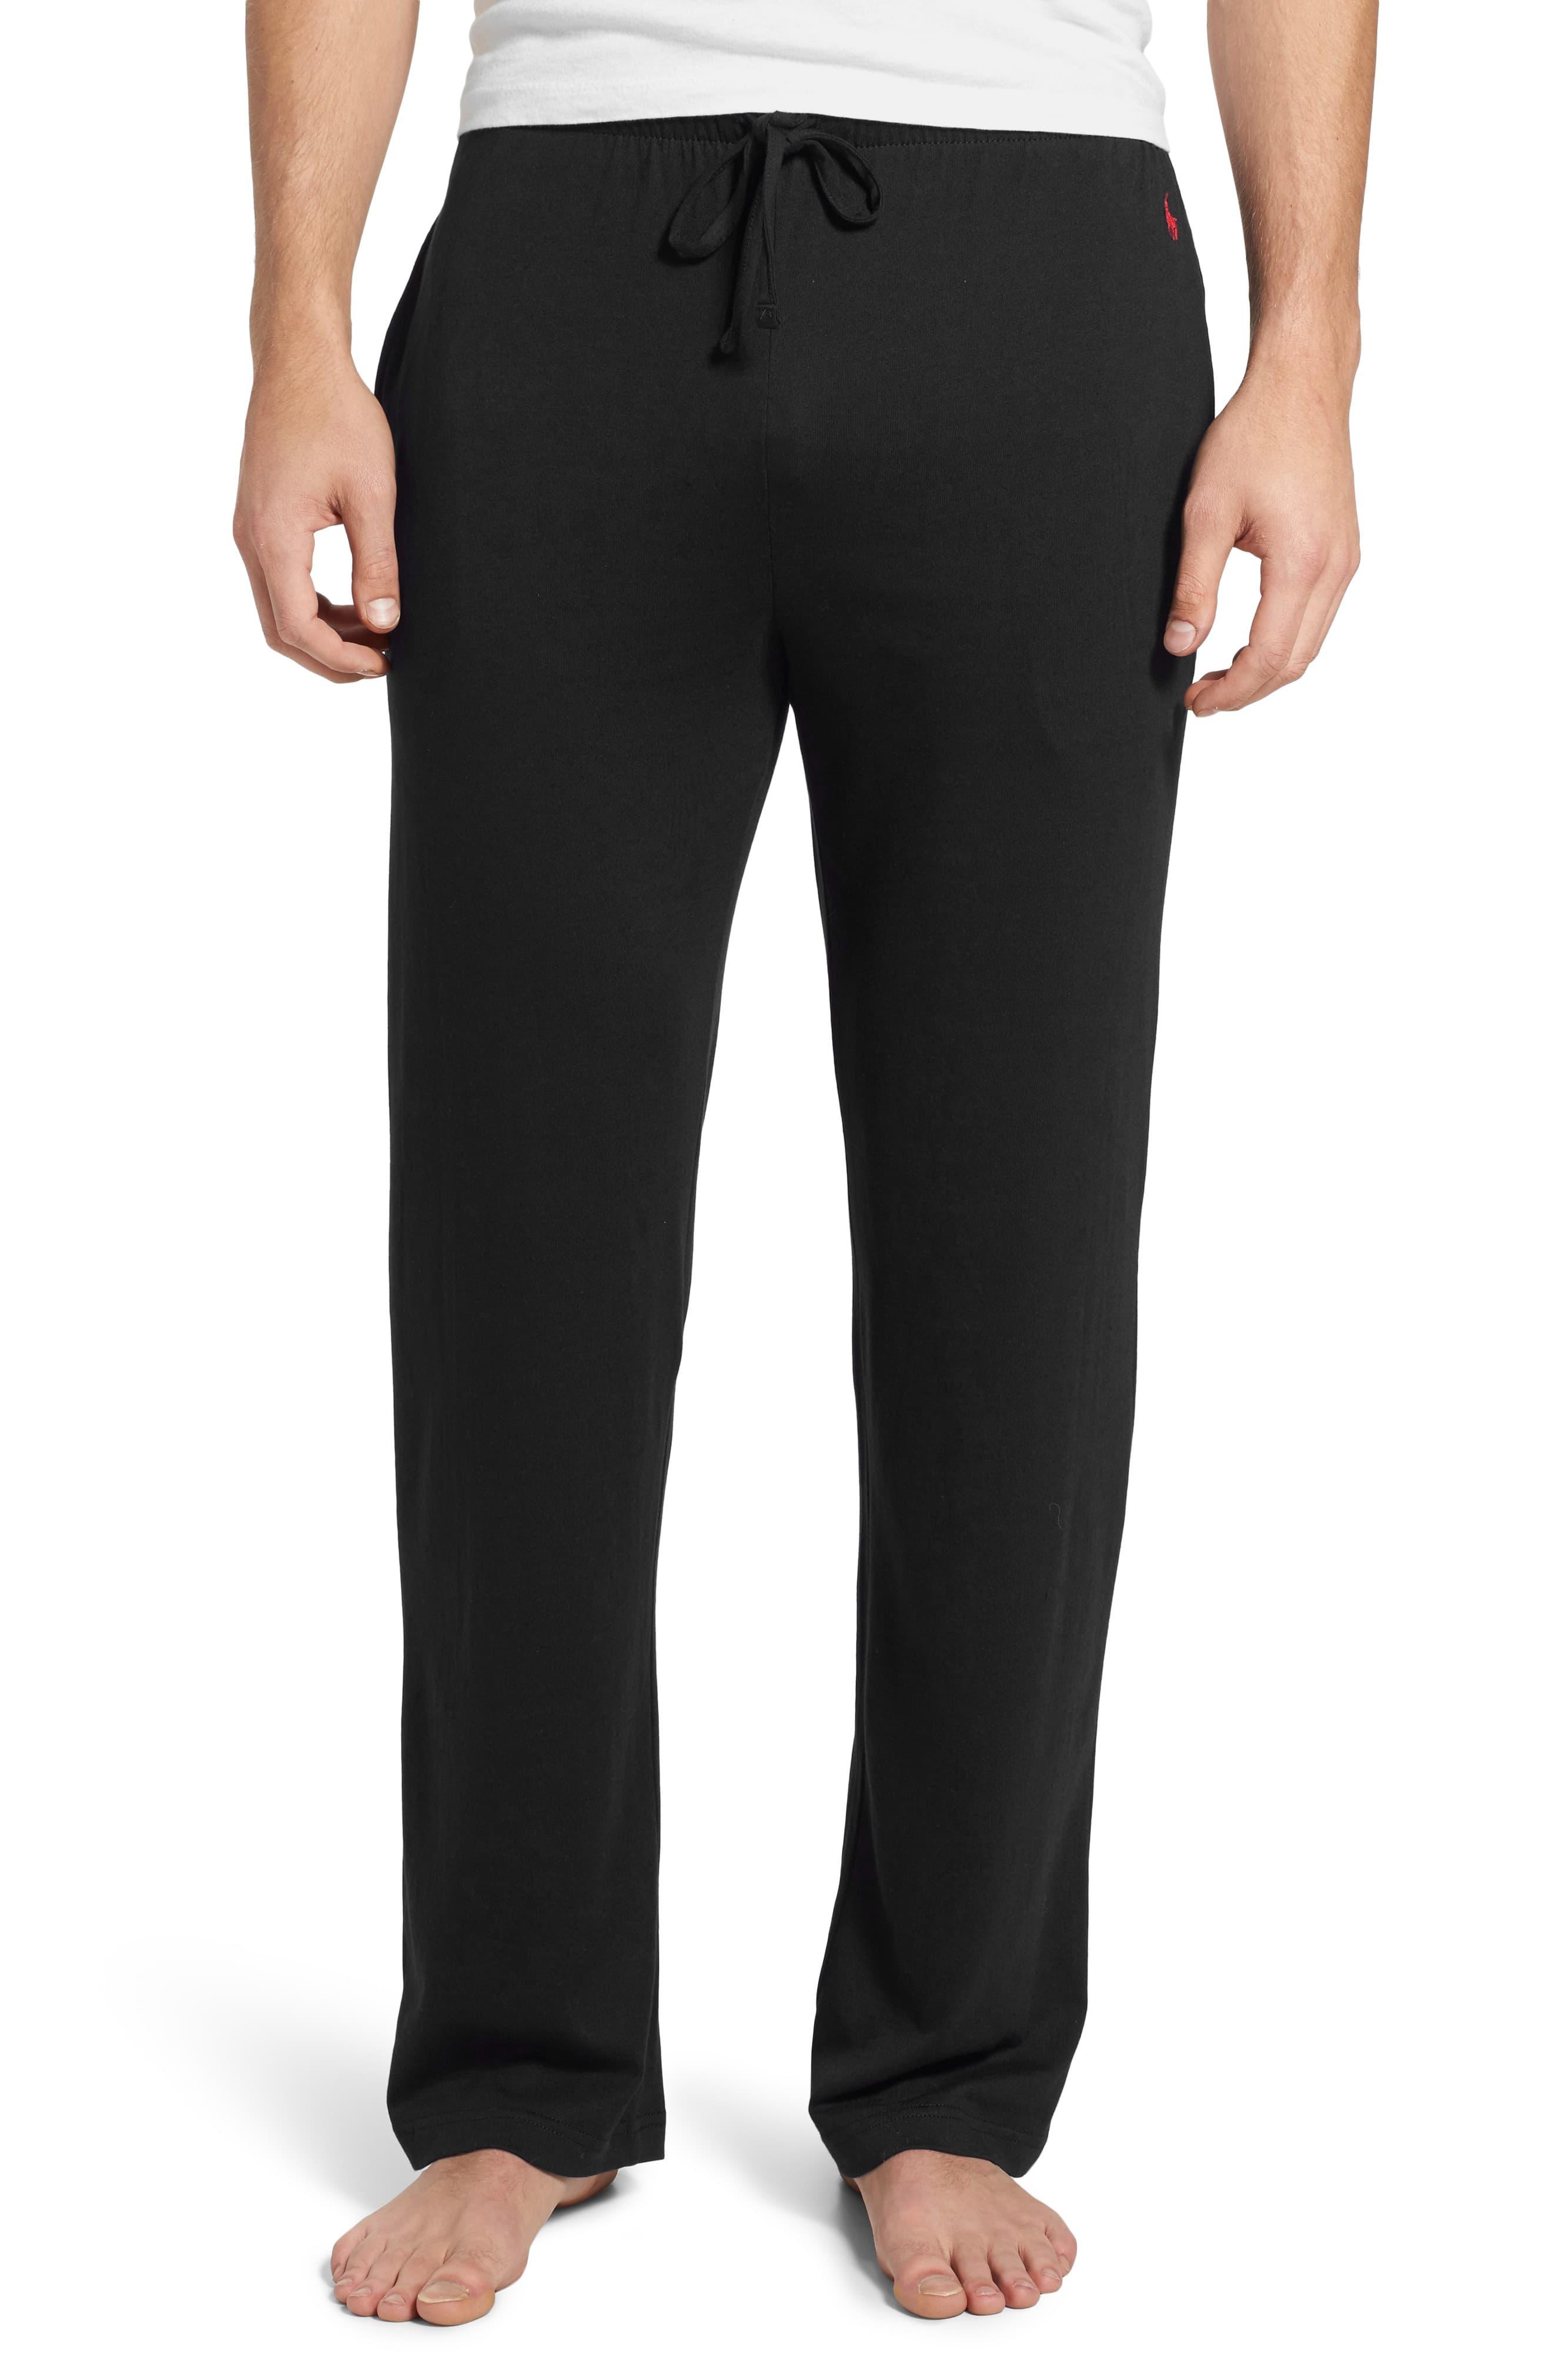 Polo Ralph Lauren Cotton Pajama Pants in Black for Men - Lyst